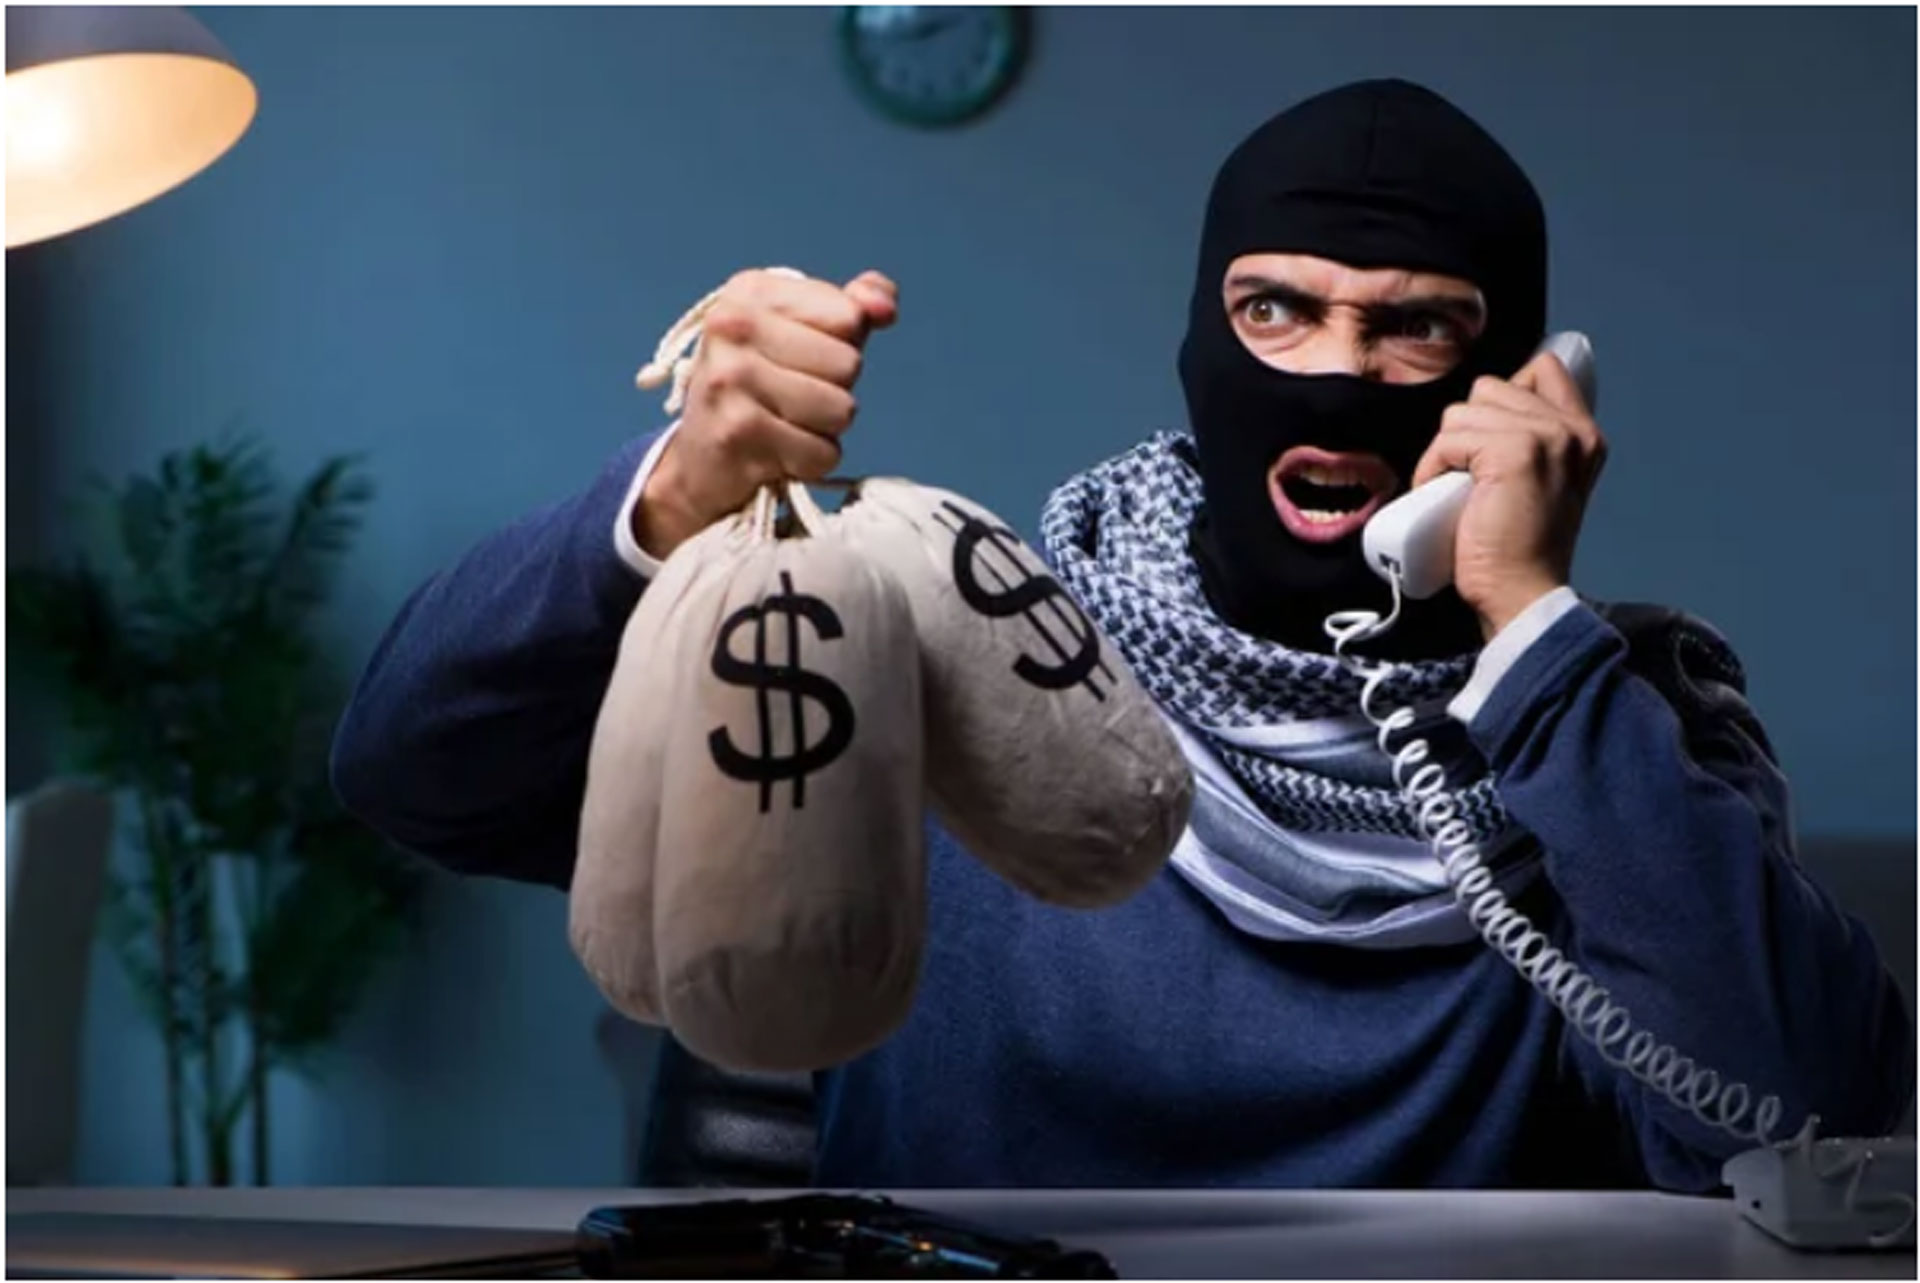 terrorist holding bags of money asking ransom money through a phone call